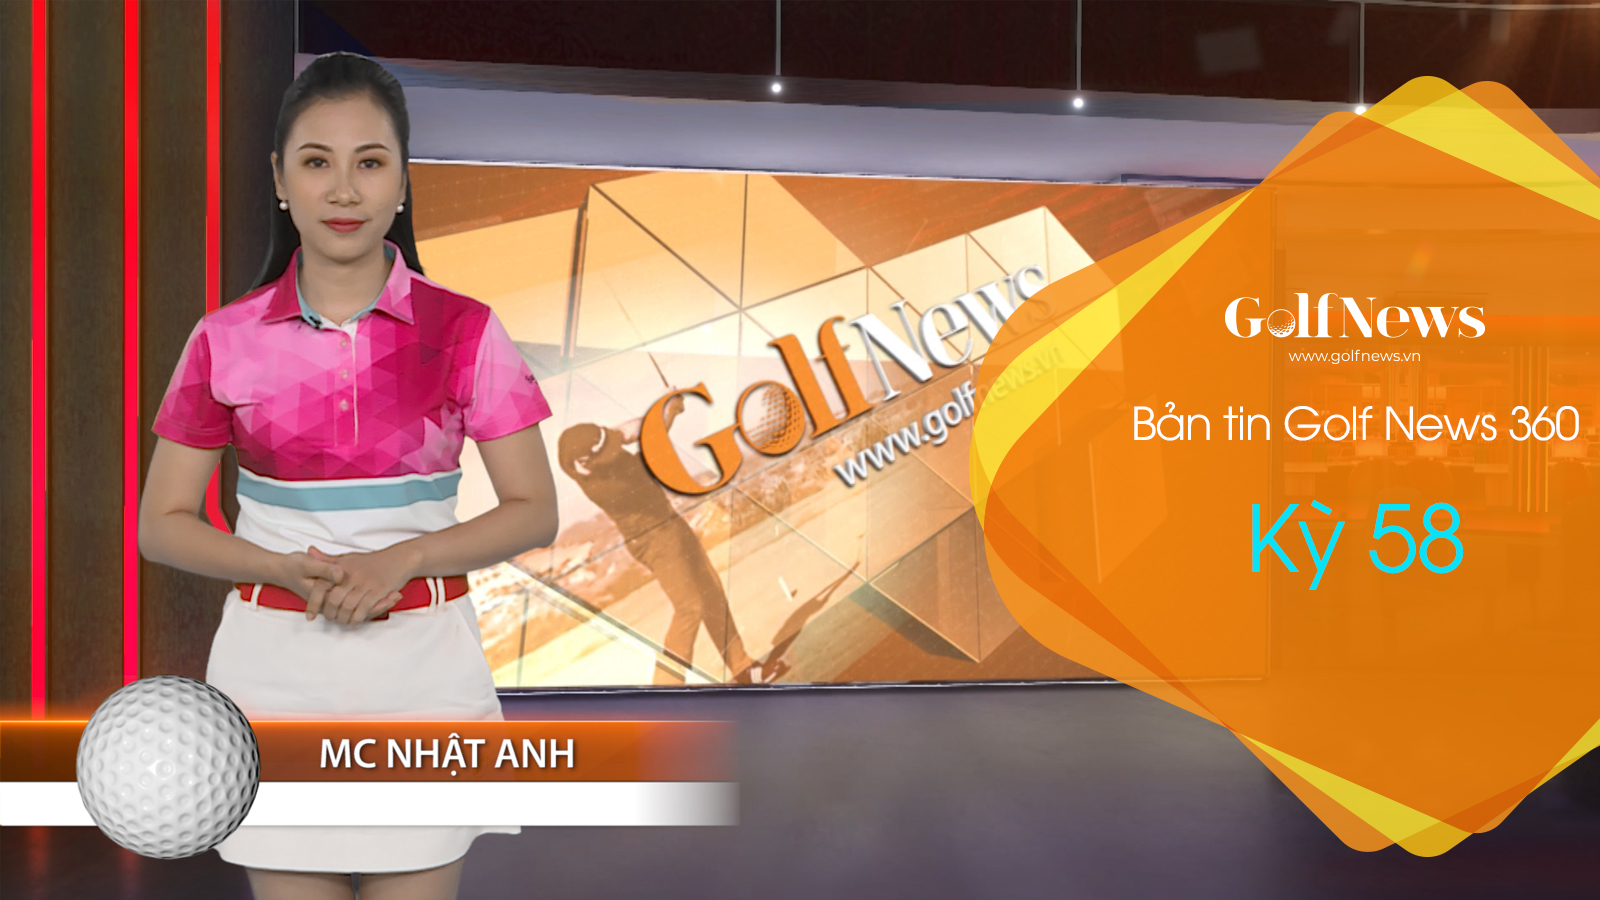 Golfnews 360 kỳ 58